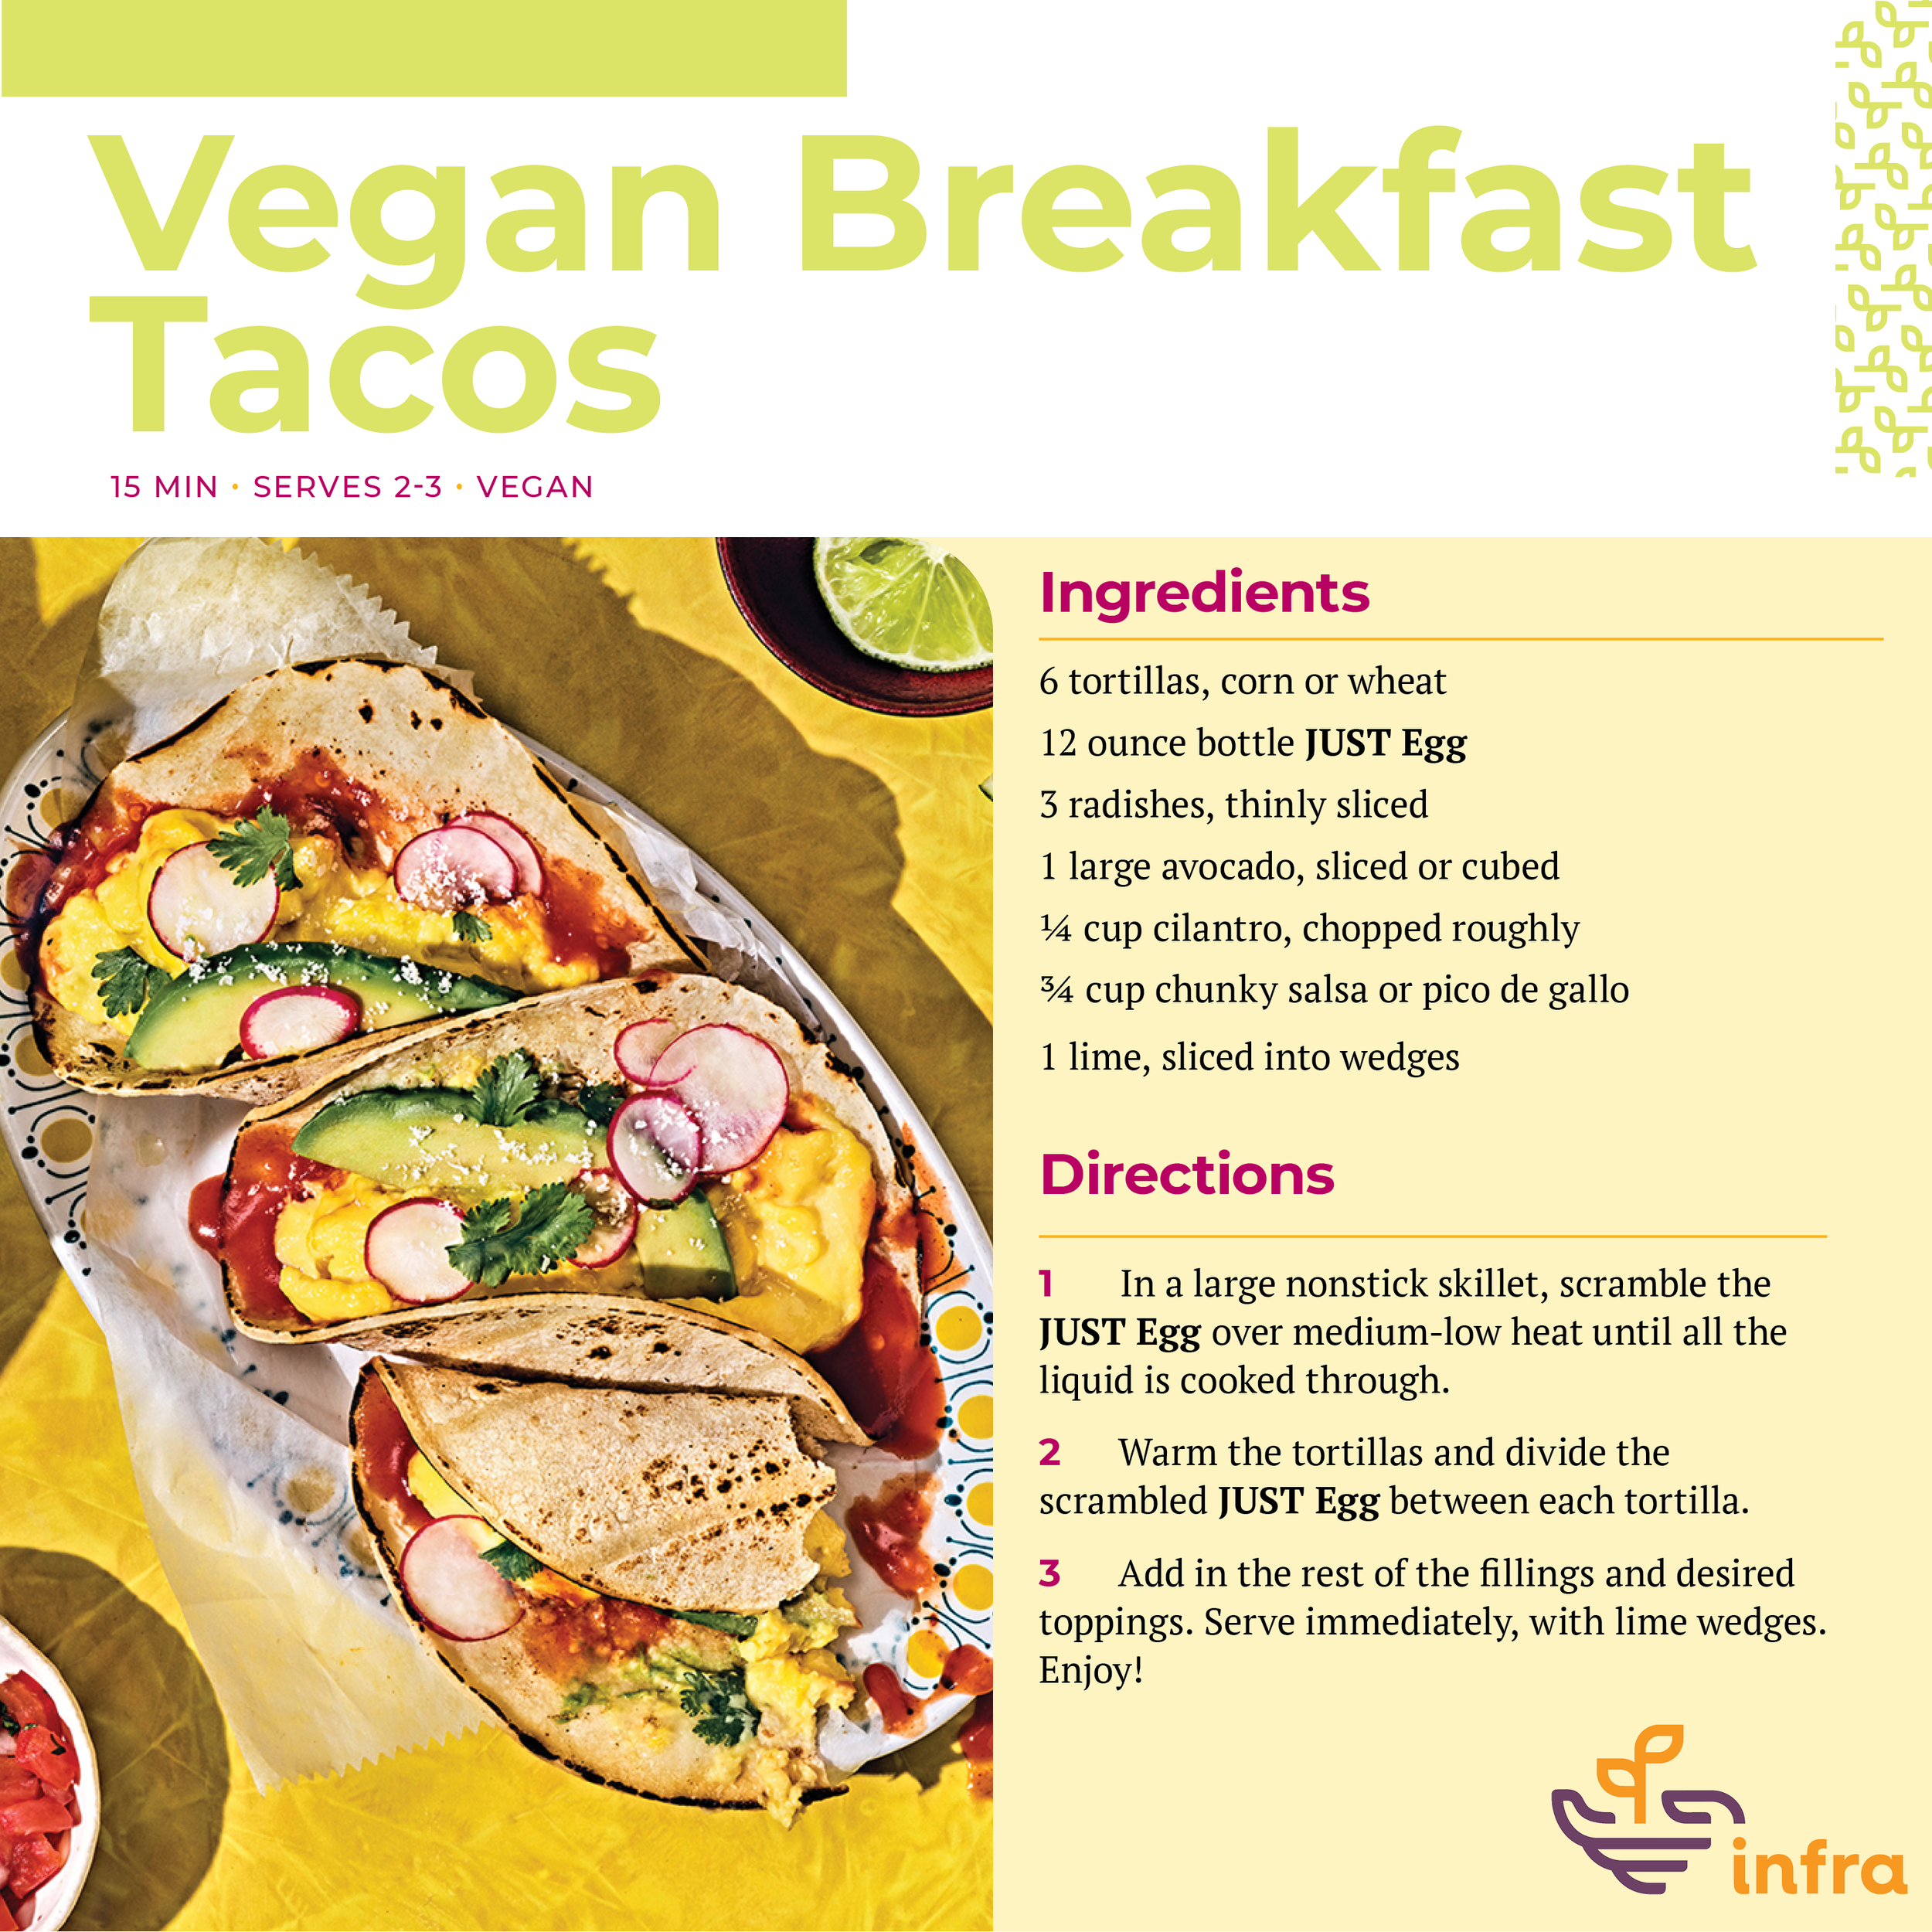 Vegan Breakfast Tacos Image and Recipe.png